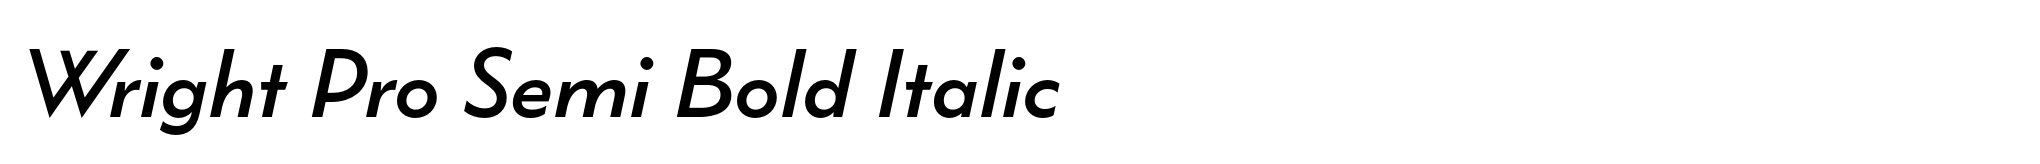 Wright Pro Semi Bold Italic image